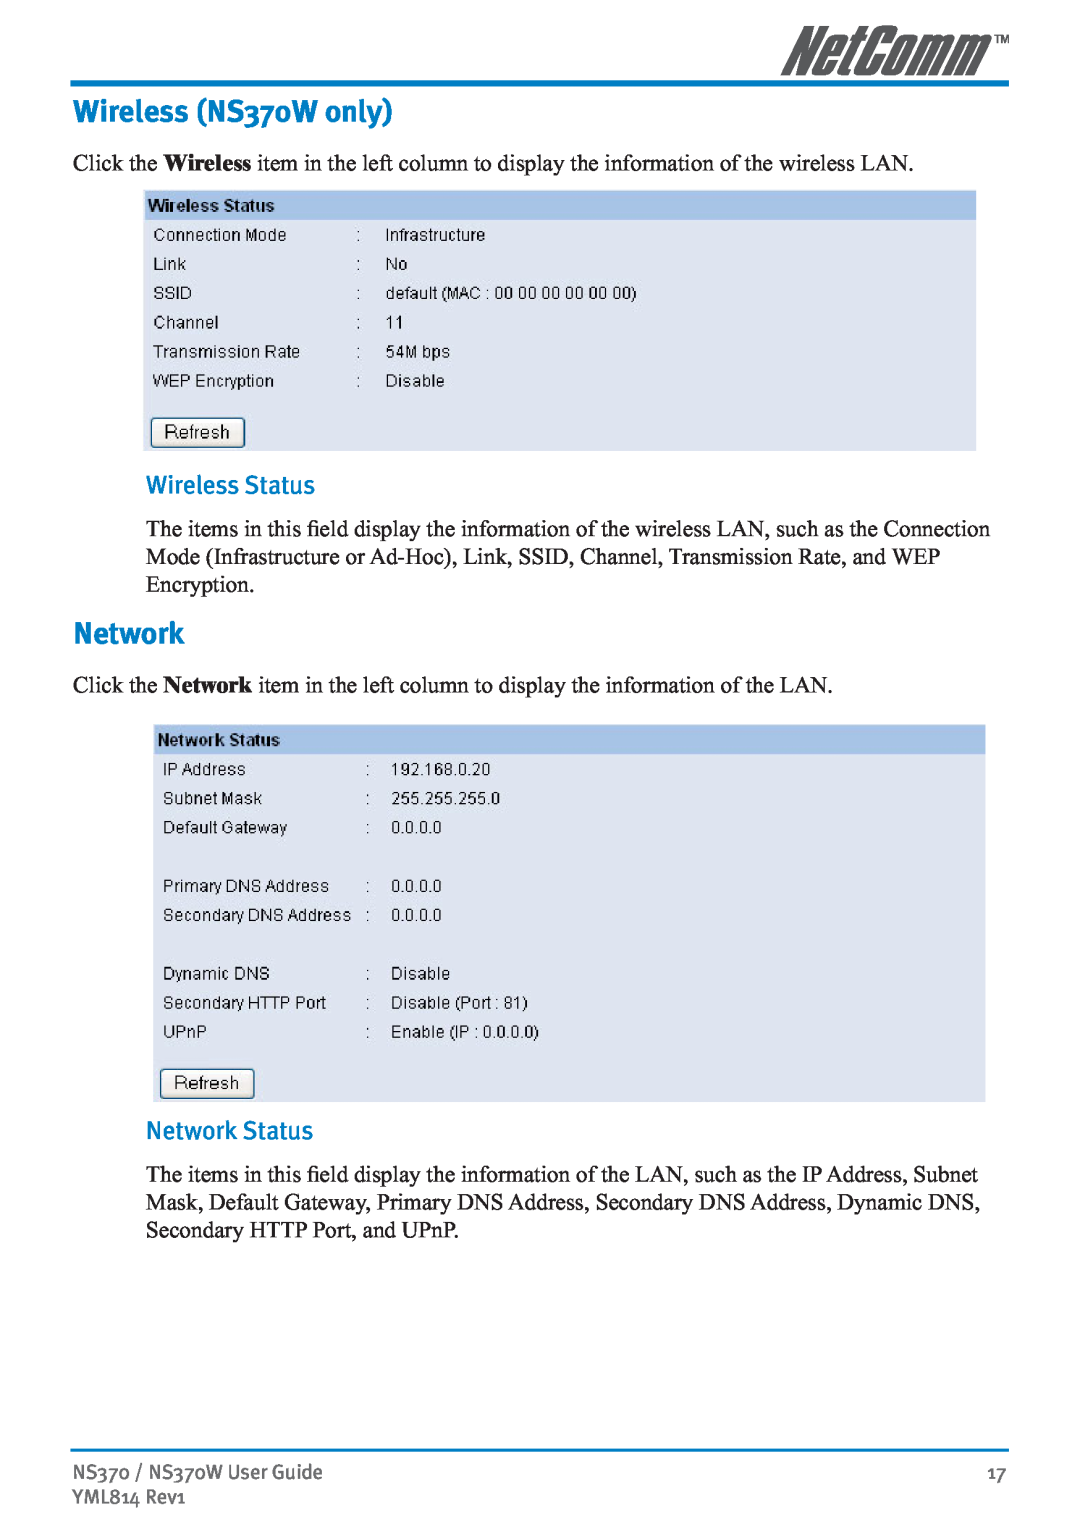 NetComm manual Wireless NS370W only, Wireless Status, Network Status 